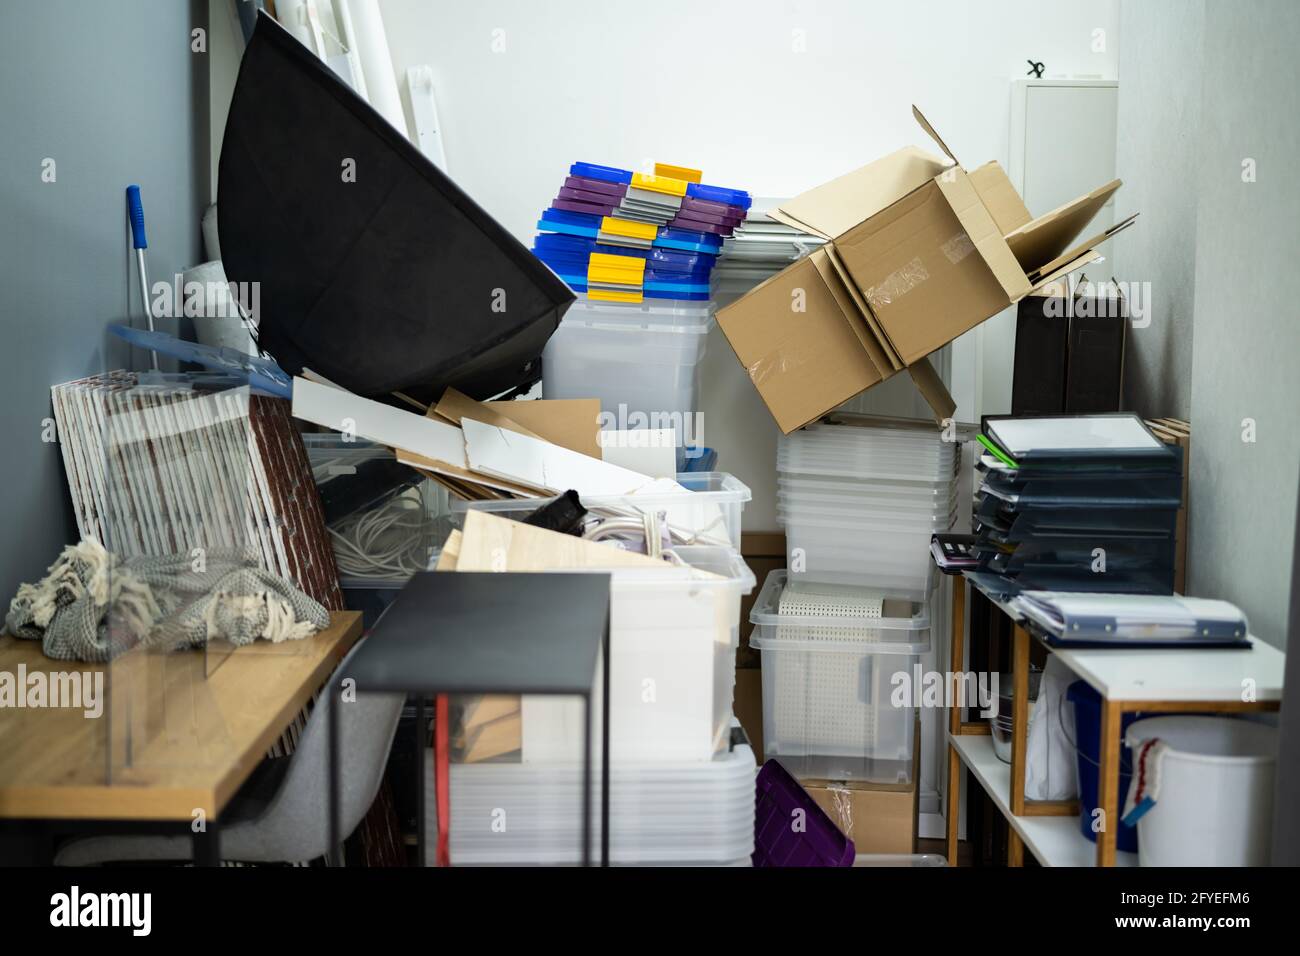 Messy Storage Closet Full Of Junk. Hoarder Stuff Stock Photo